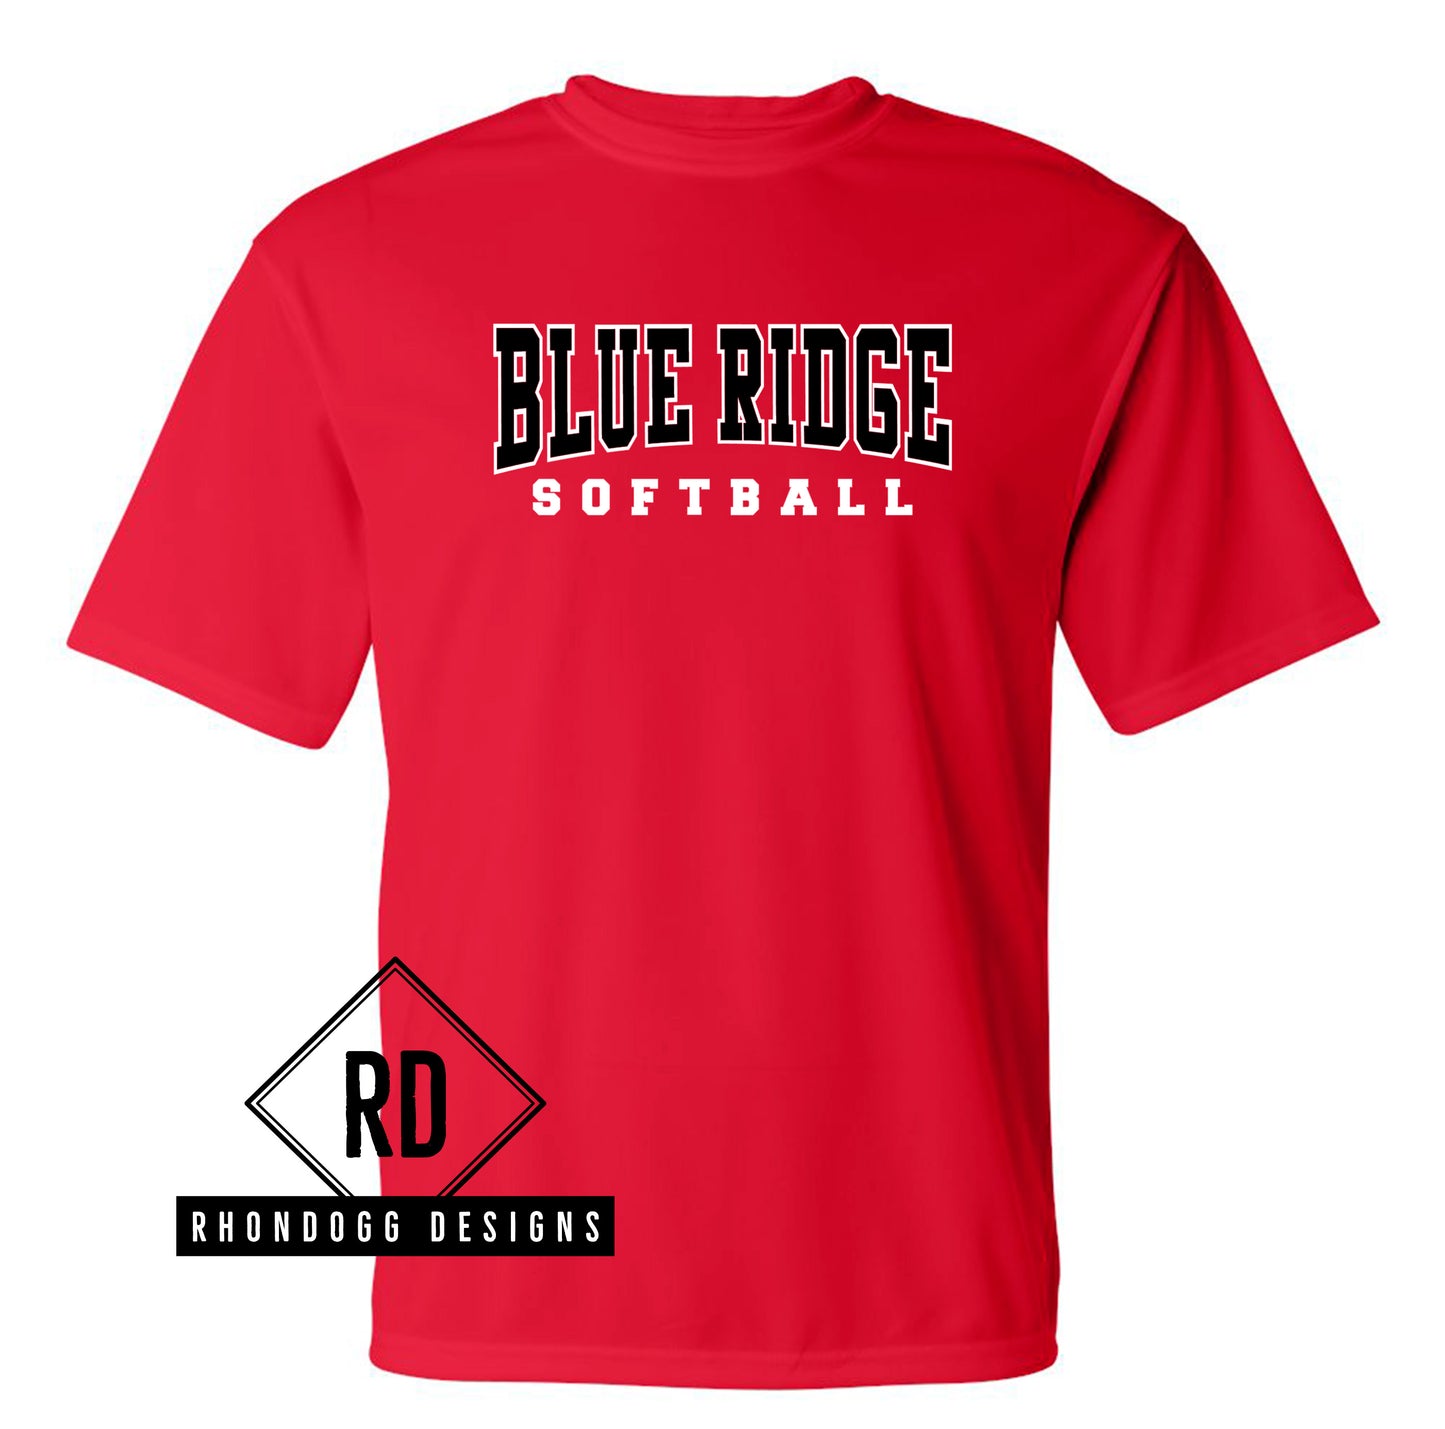 Blue Ridge Middle School Softball Performance Shirt